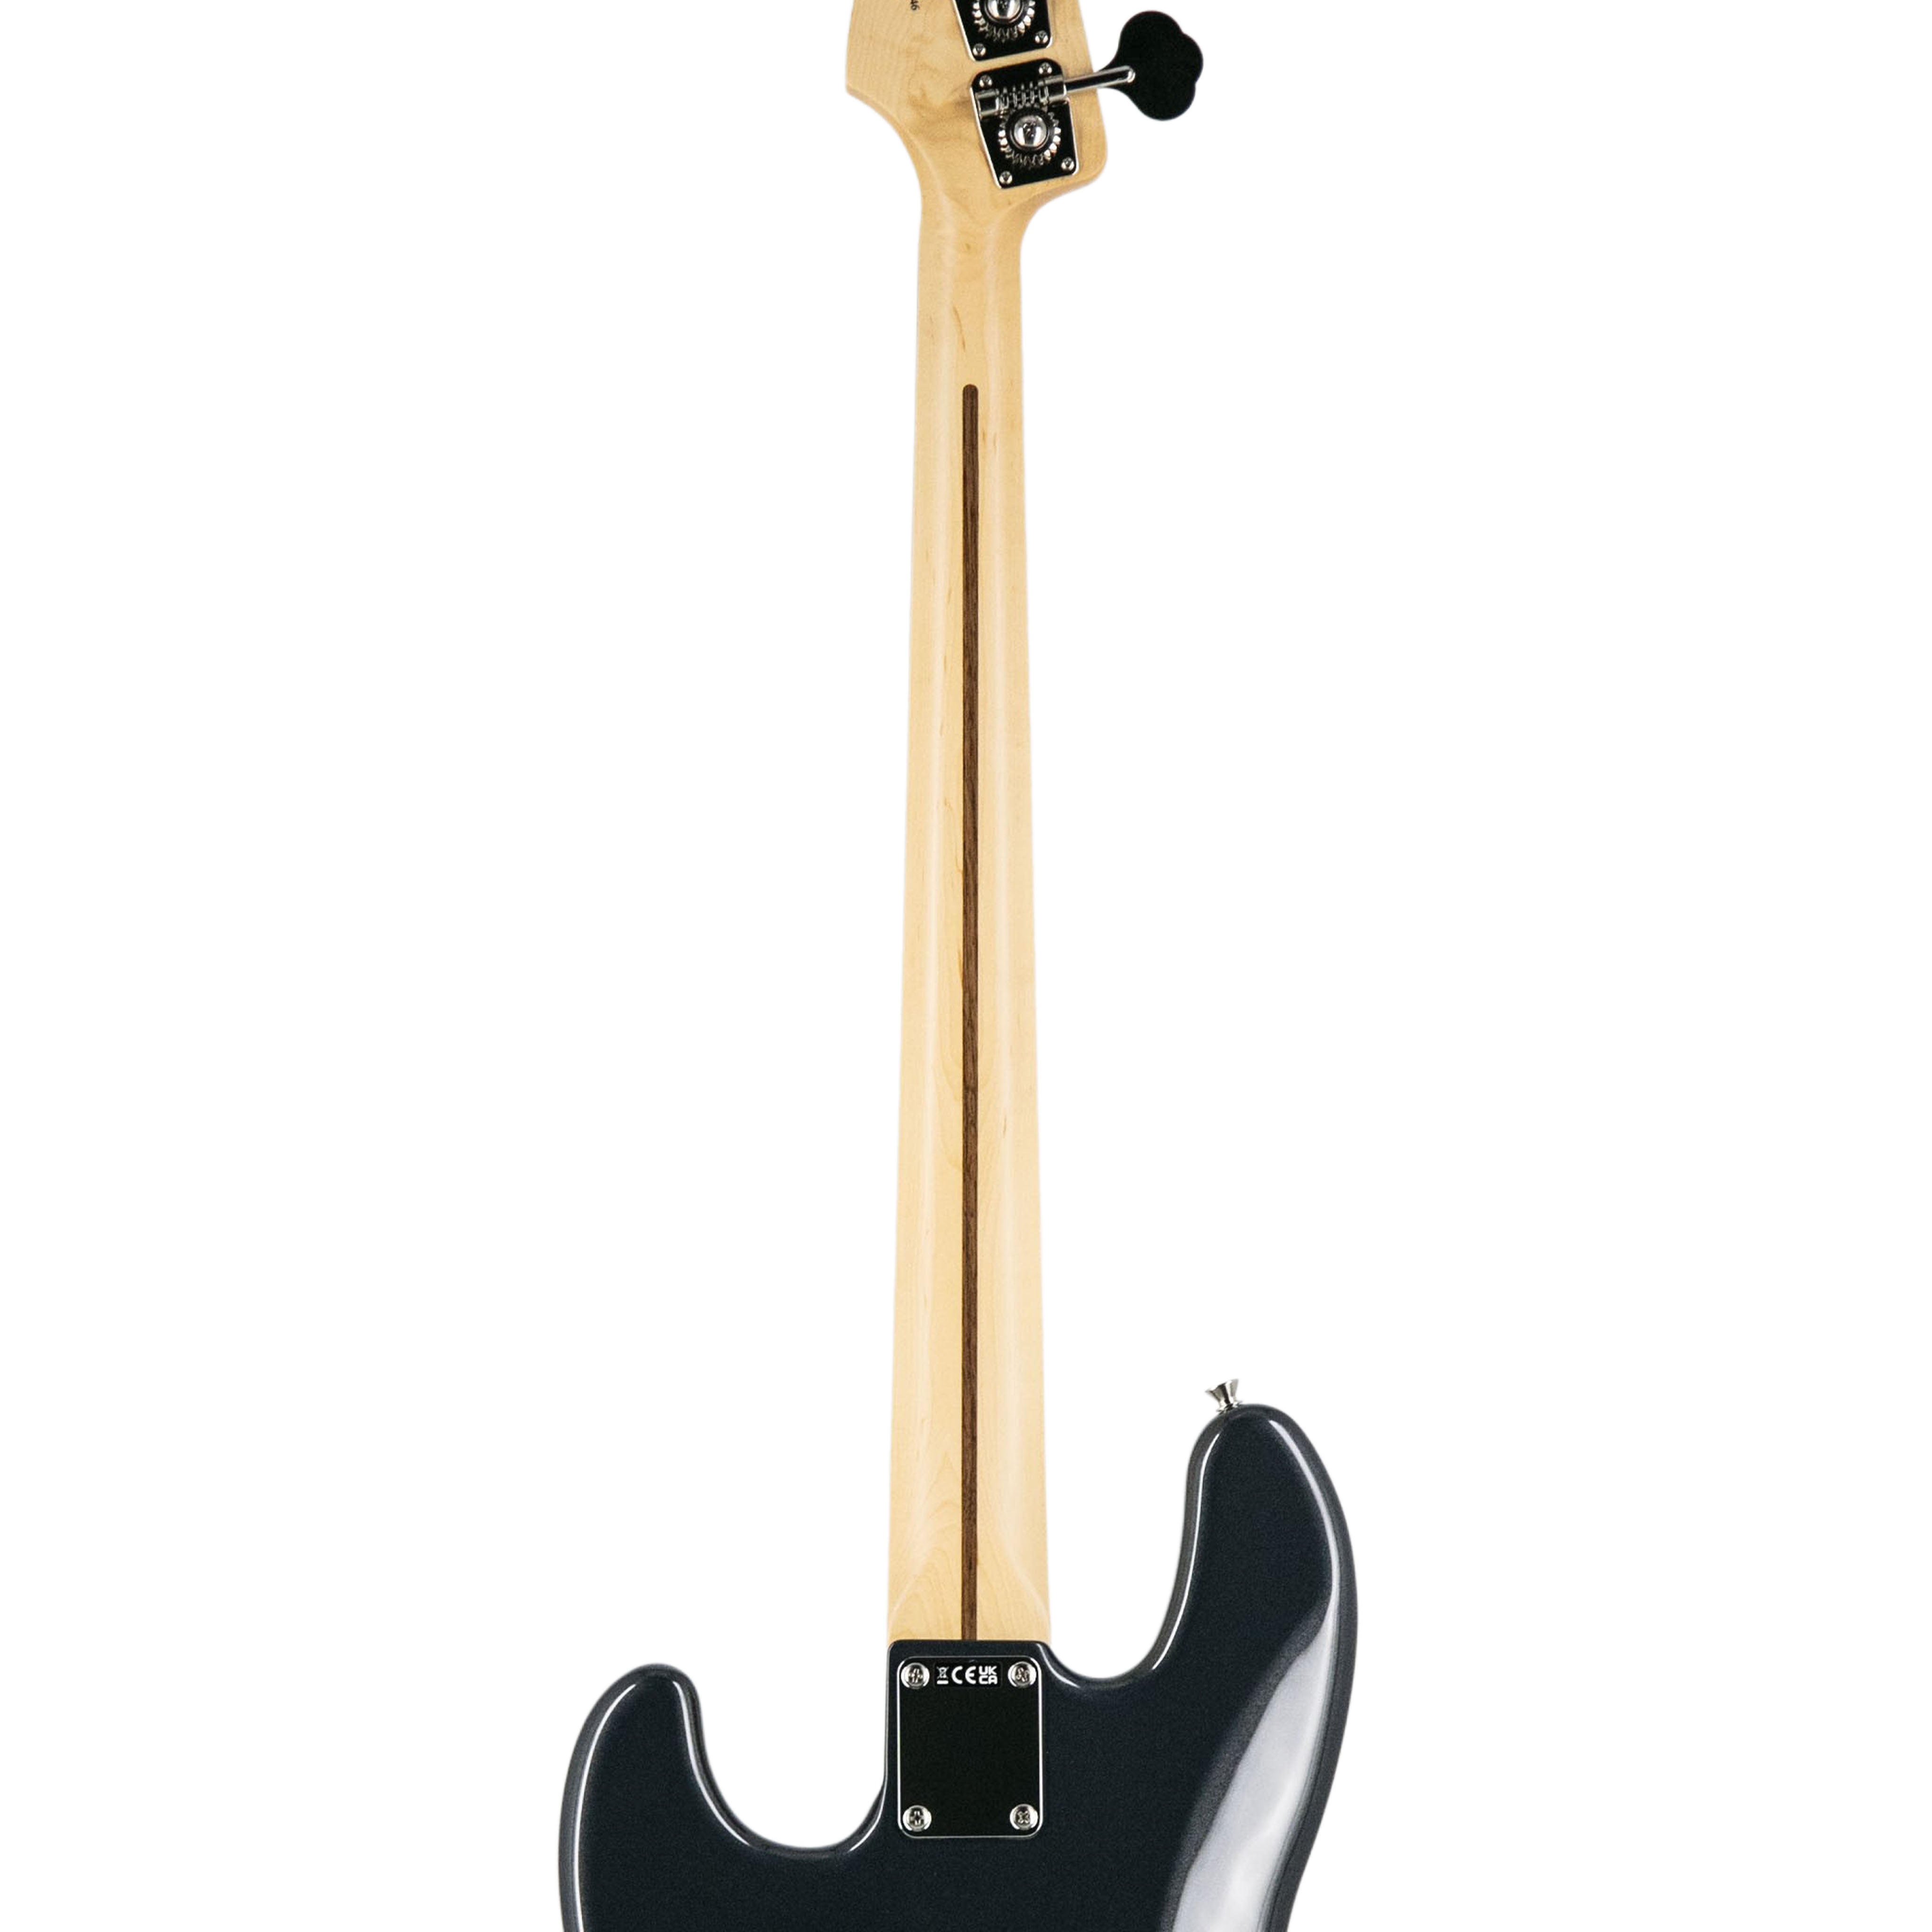 Fender FSR Collection Hybrid II Jazz Bass Guitar, RW FB, Charcoal Frost Metallic